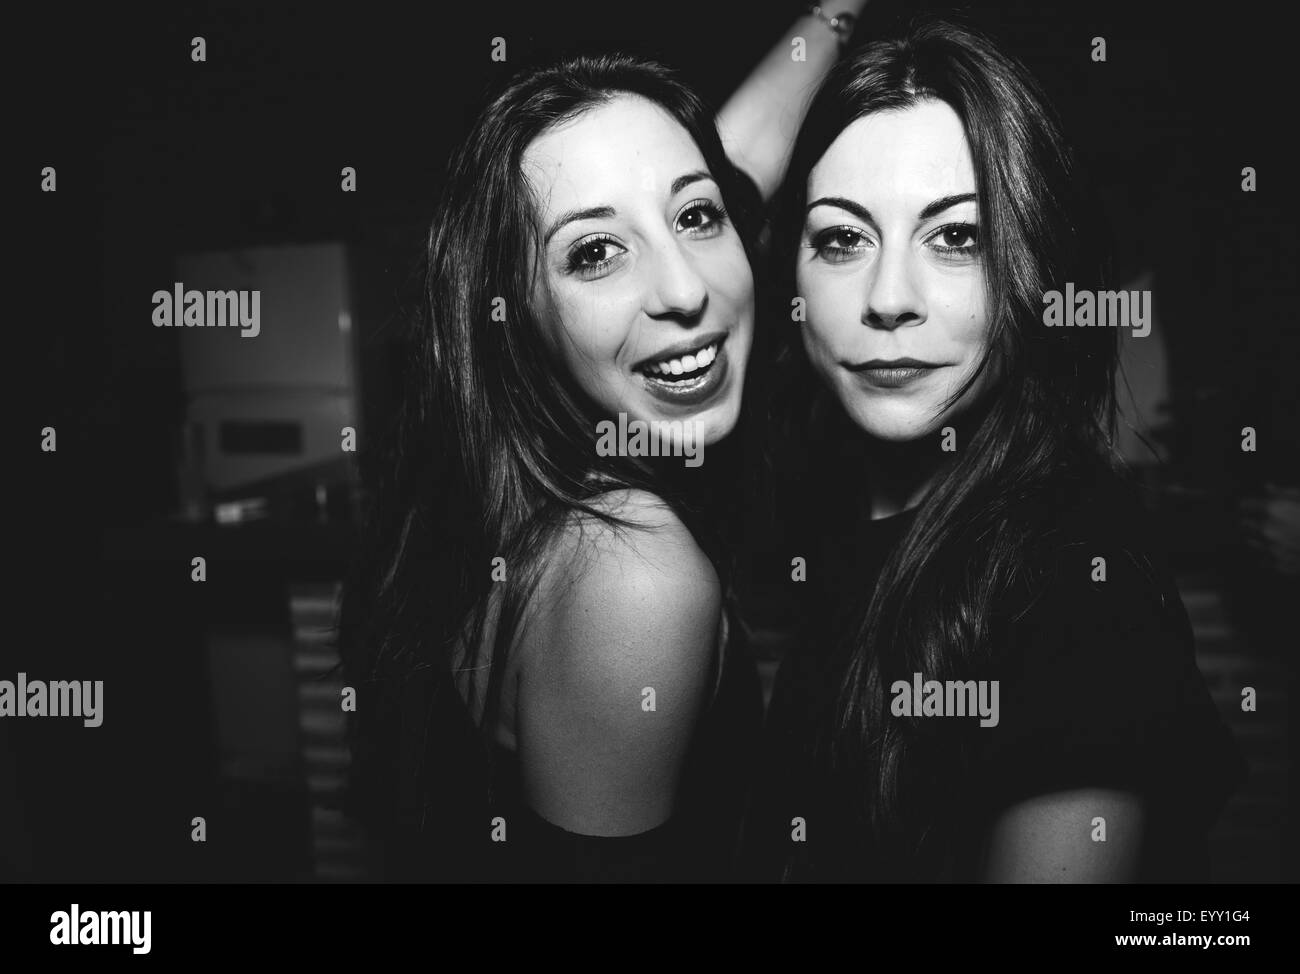 Smiling women dancing in nightclub Stock Photo